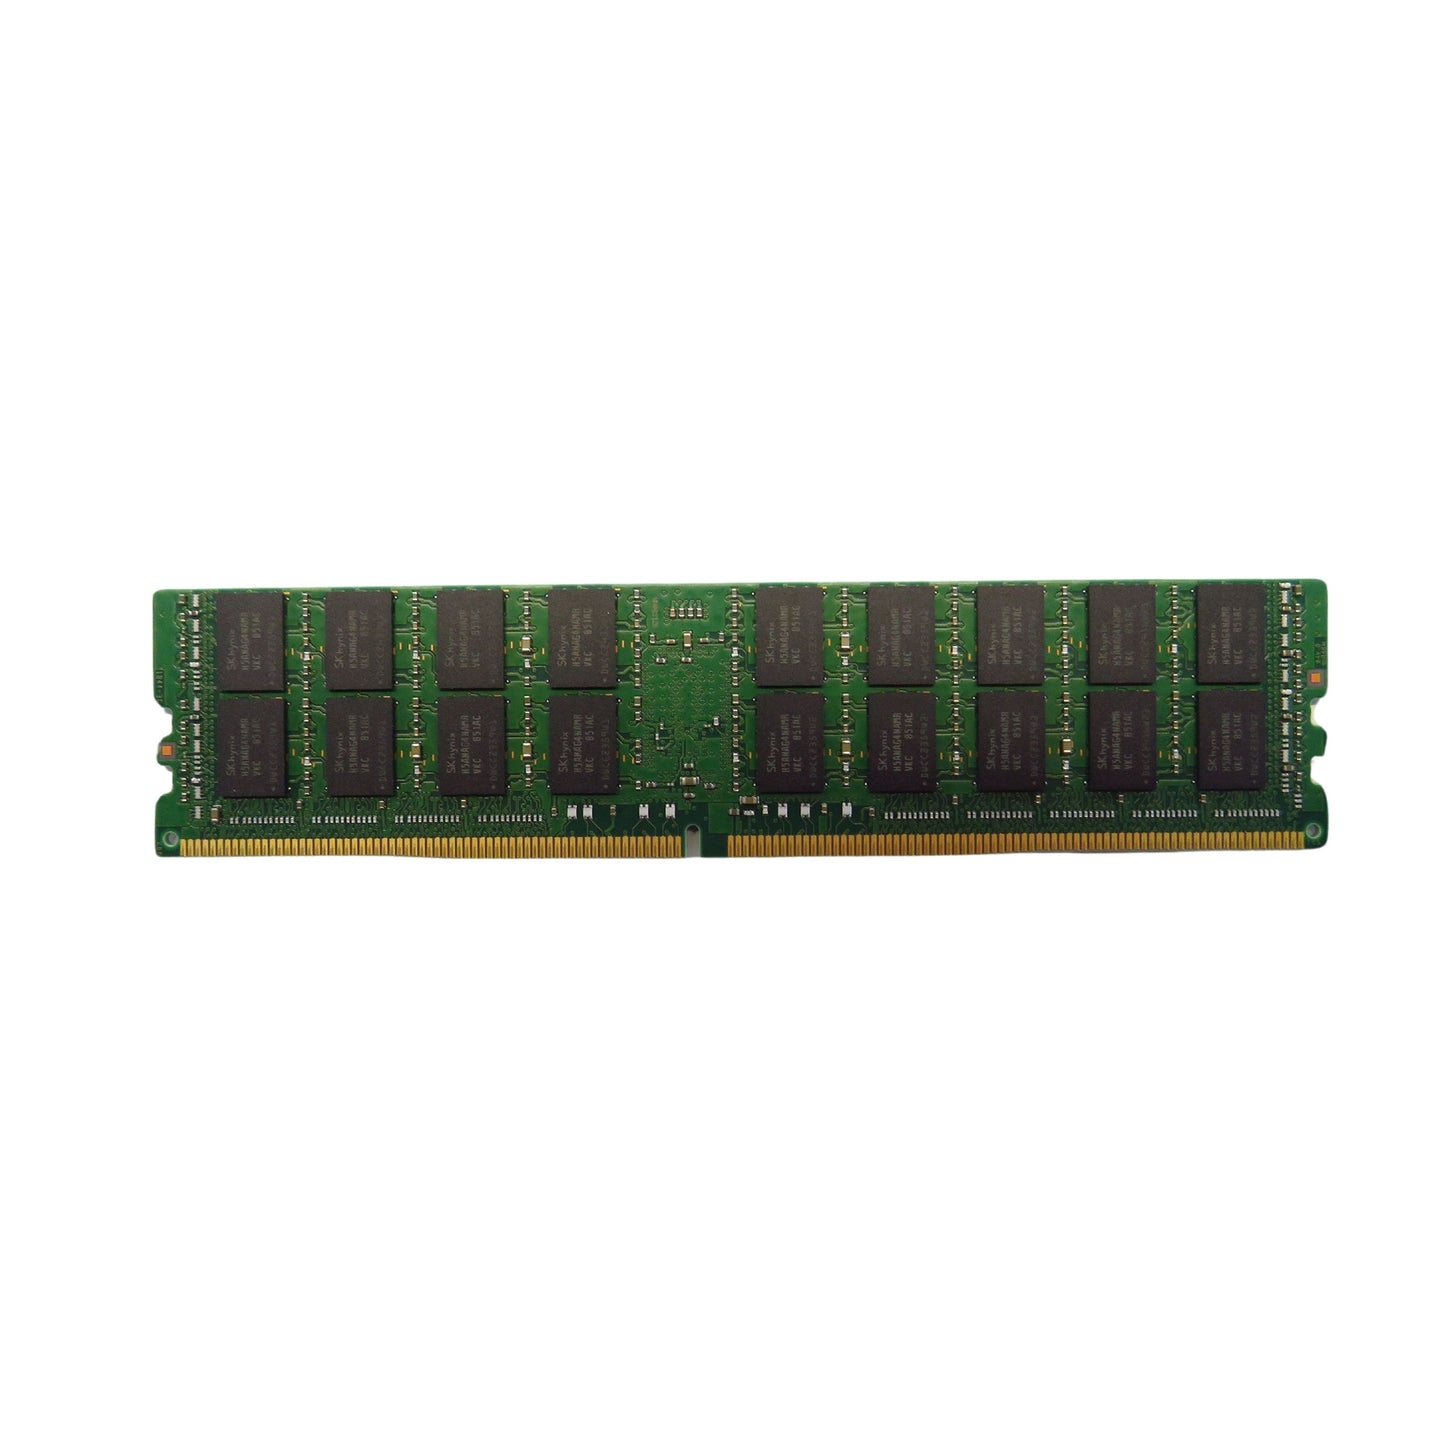 HP 840759-091 815101-B21 64GB 4DRx4 PC4-21300 2666MHz DDR4 Server Memory (Refurbished)